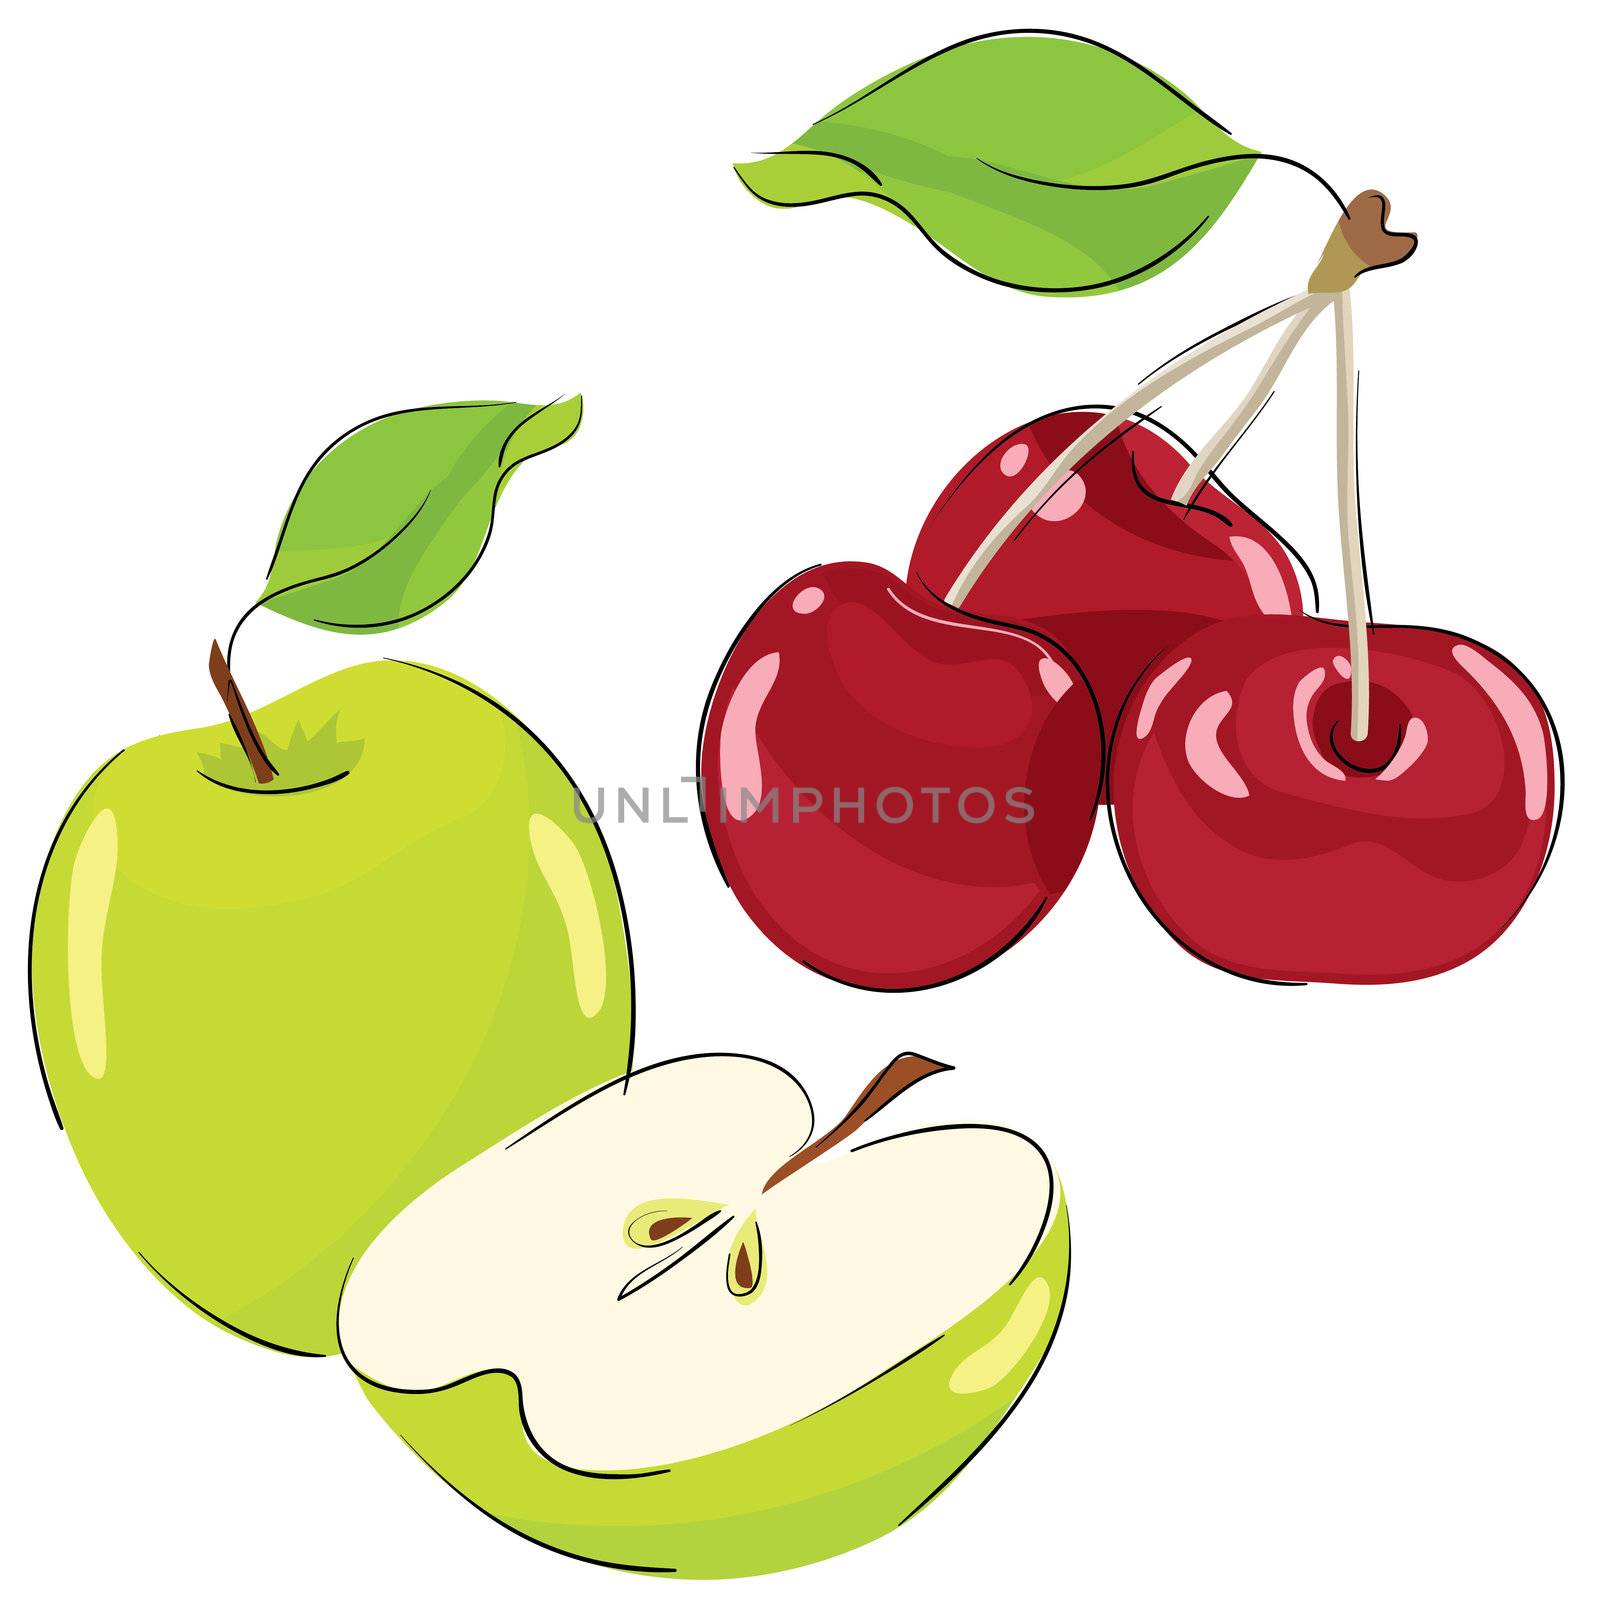 Apple and cherry by pzRomashka